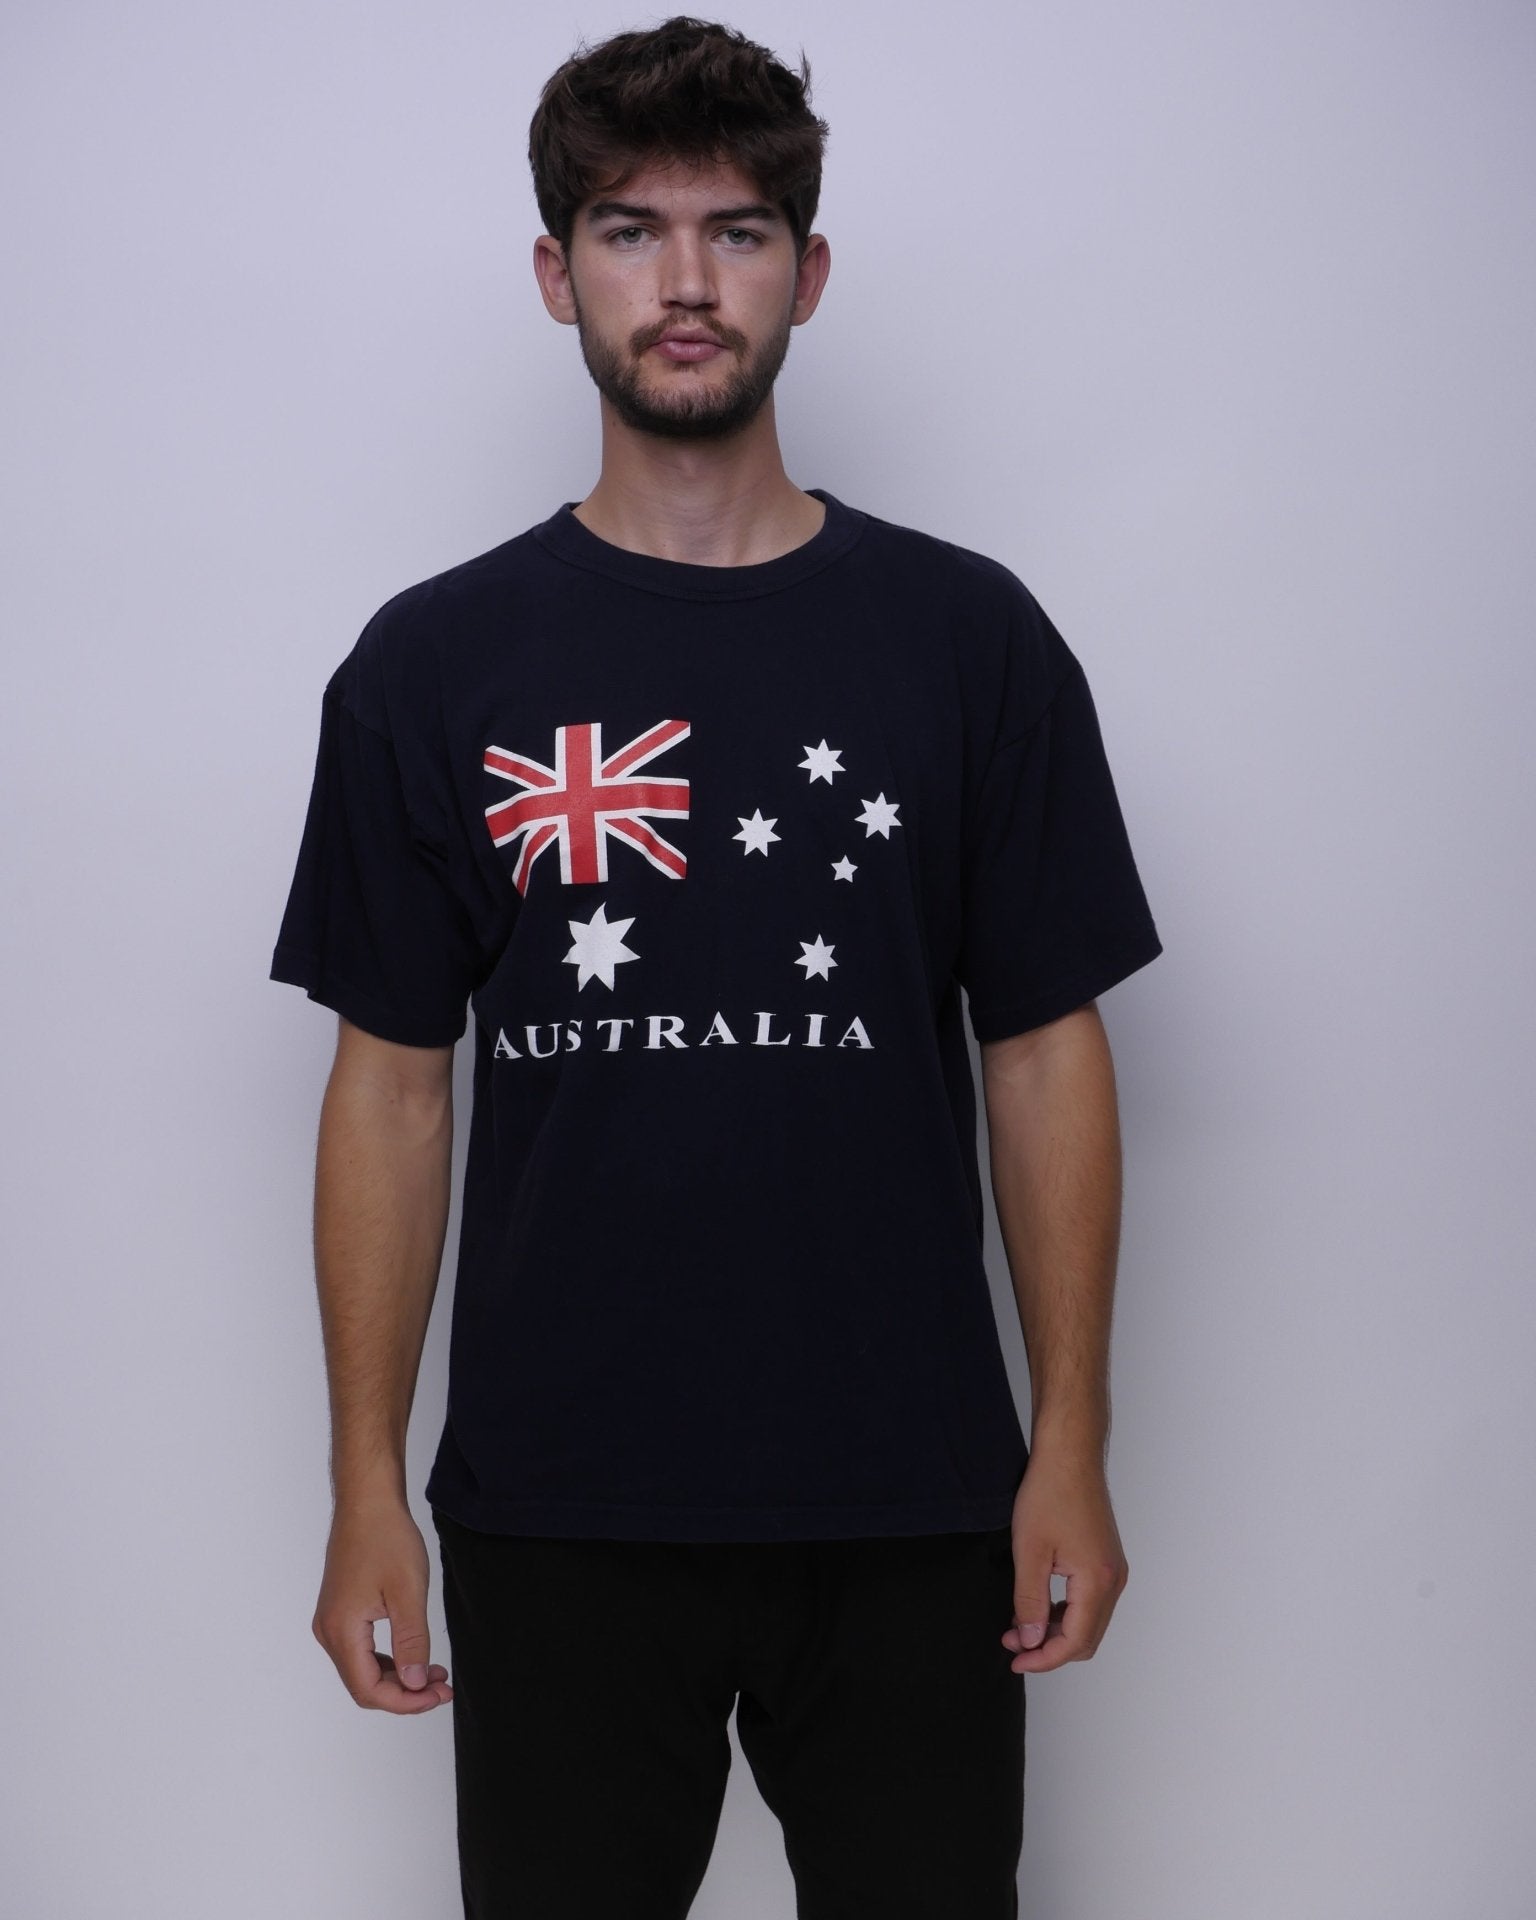 Australia printed Graphic Shirt - Peeces